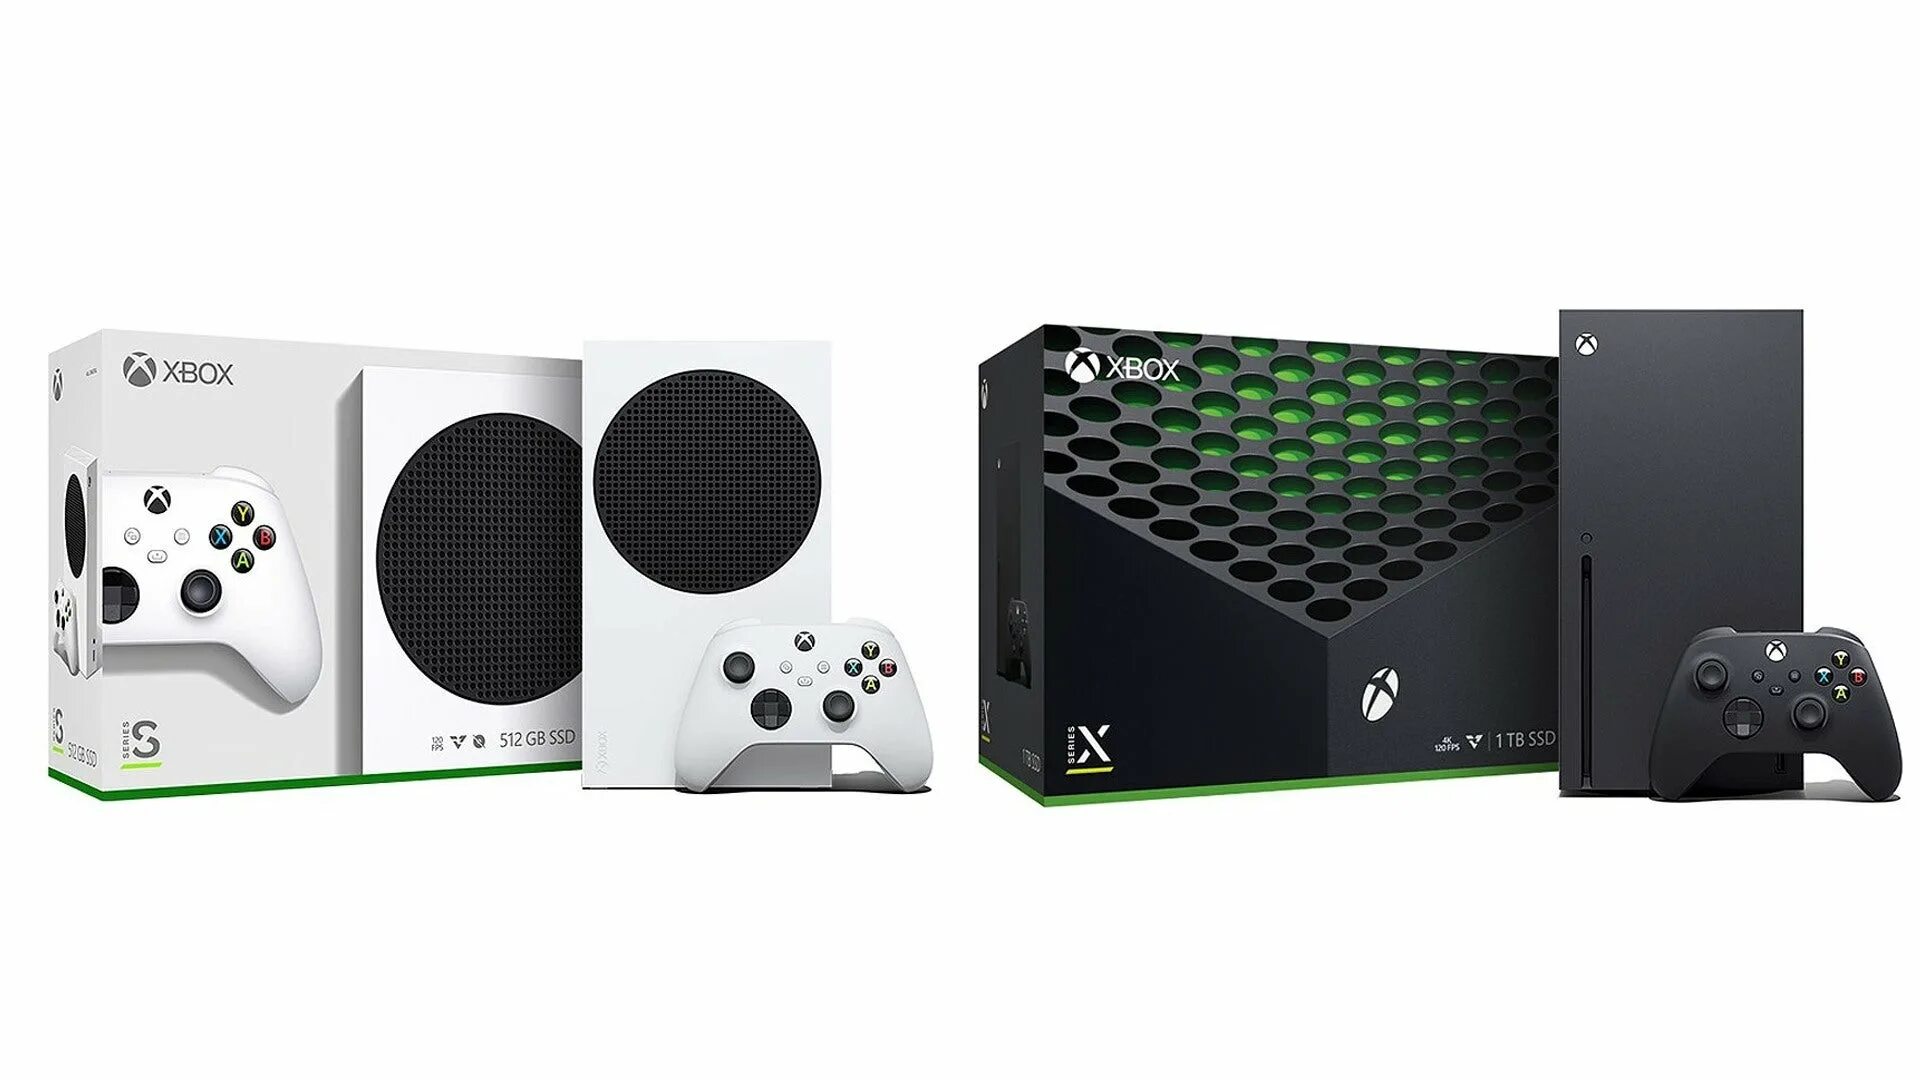 Xbox series x дата выхода в россии. Xbox Series s Console. Xbox Series x/s. Консоль Microsoft Xbox Series x. Xbox Series x 1tb.